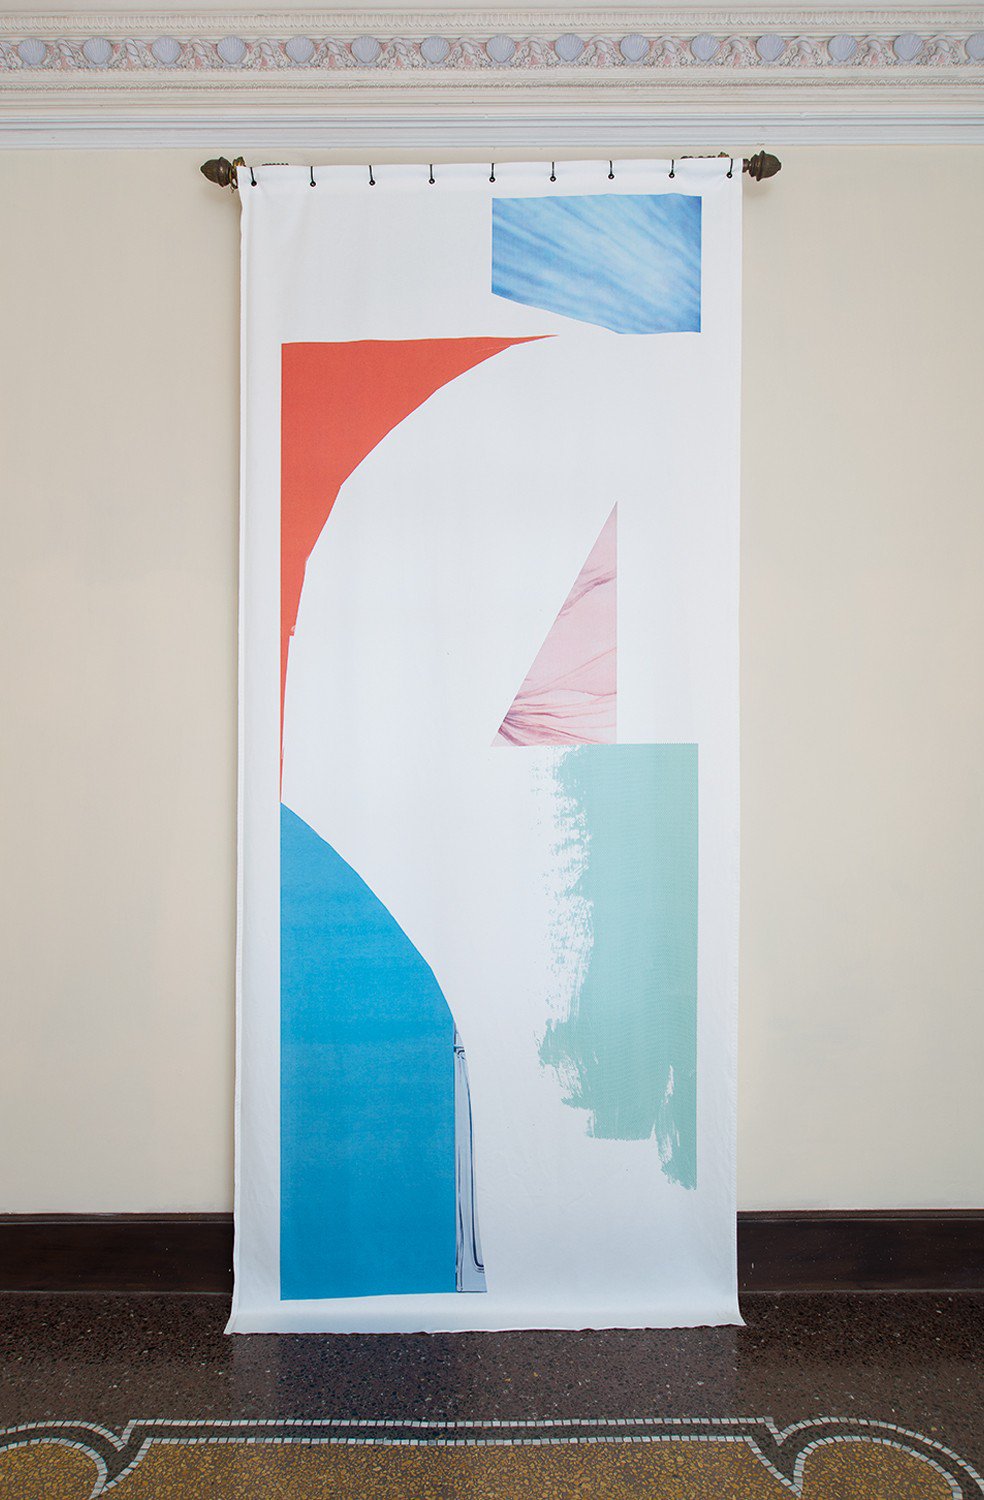 Nick OberthalerUntitled (Negative shapes I), 2014Latex print on cotton canvas340 x 145 cm